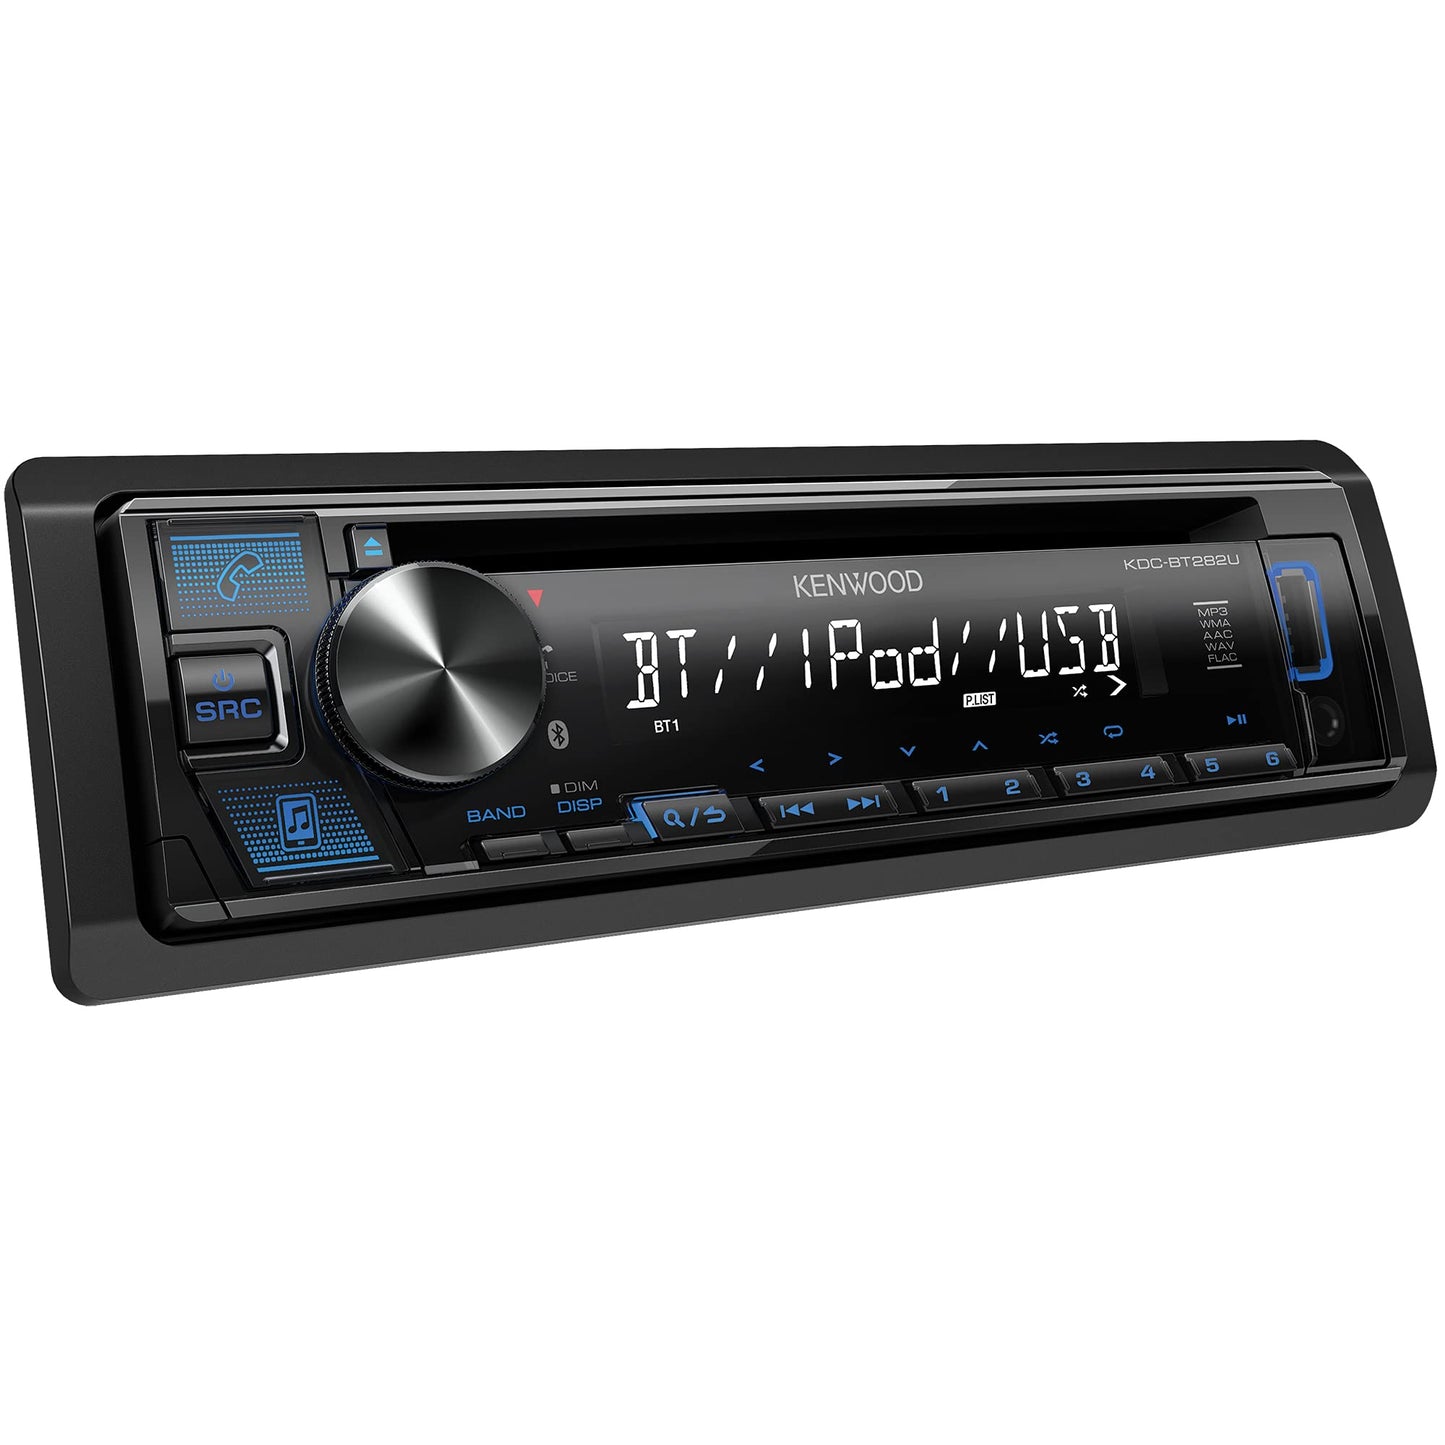 KENWOOD KDC-BT282U CD Car Stereo - AM FM, Bluetooth Audio, USB MP3, FLAC